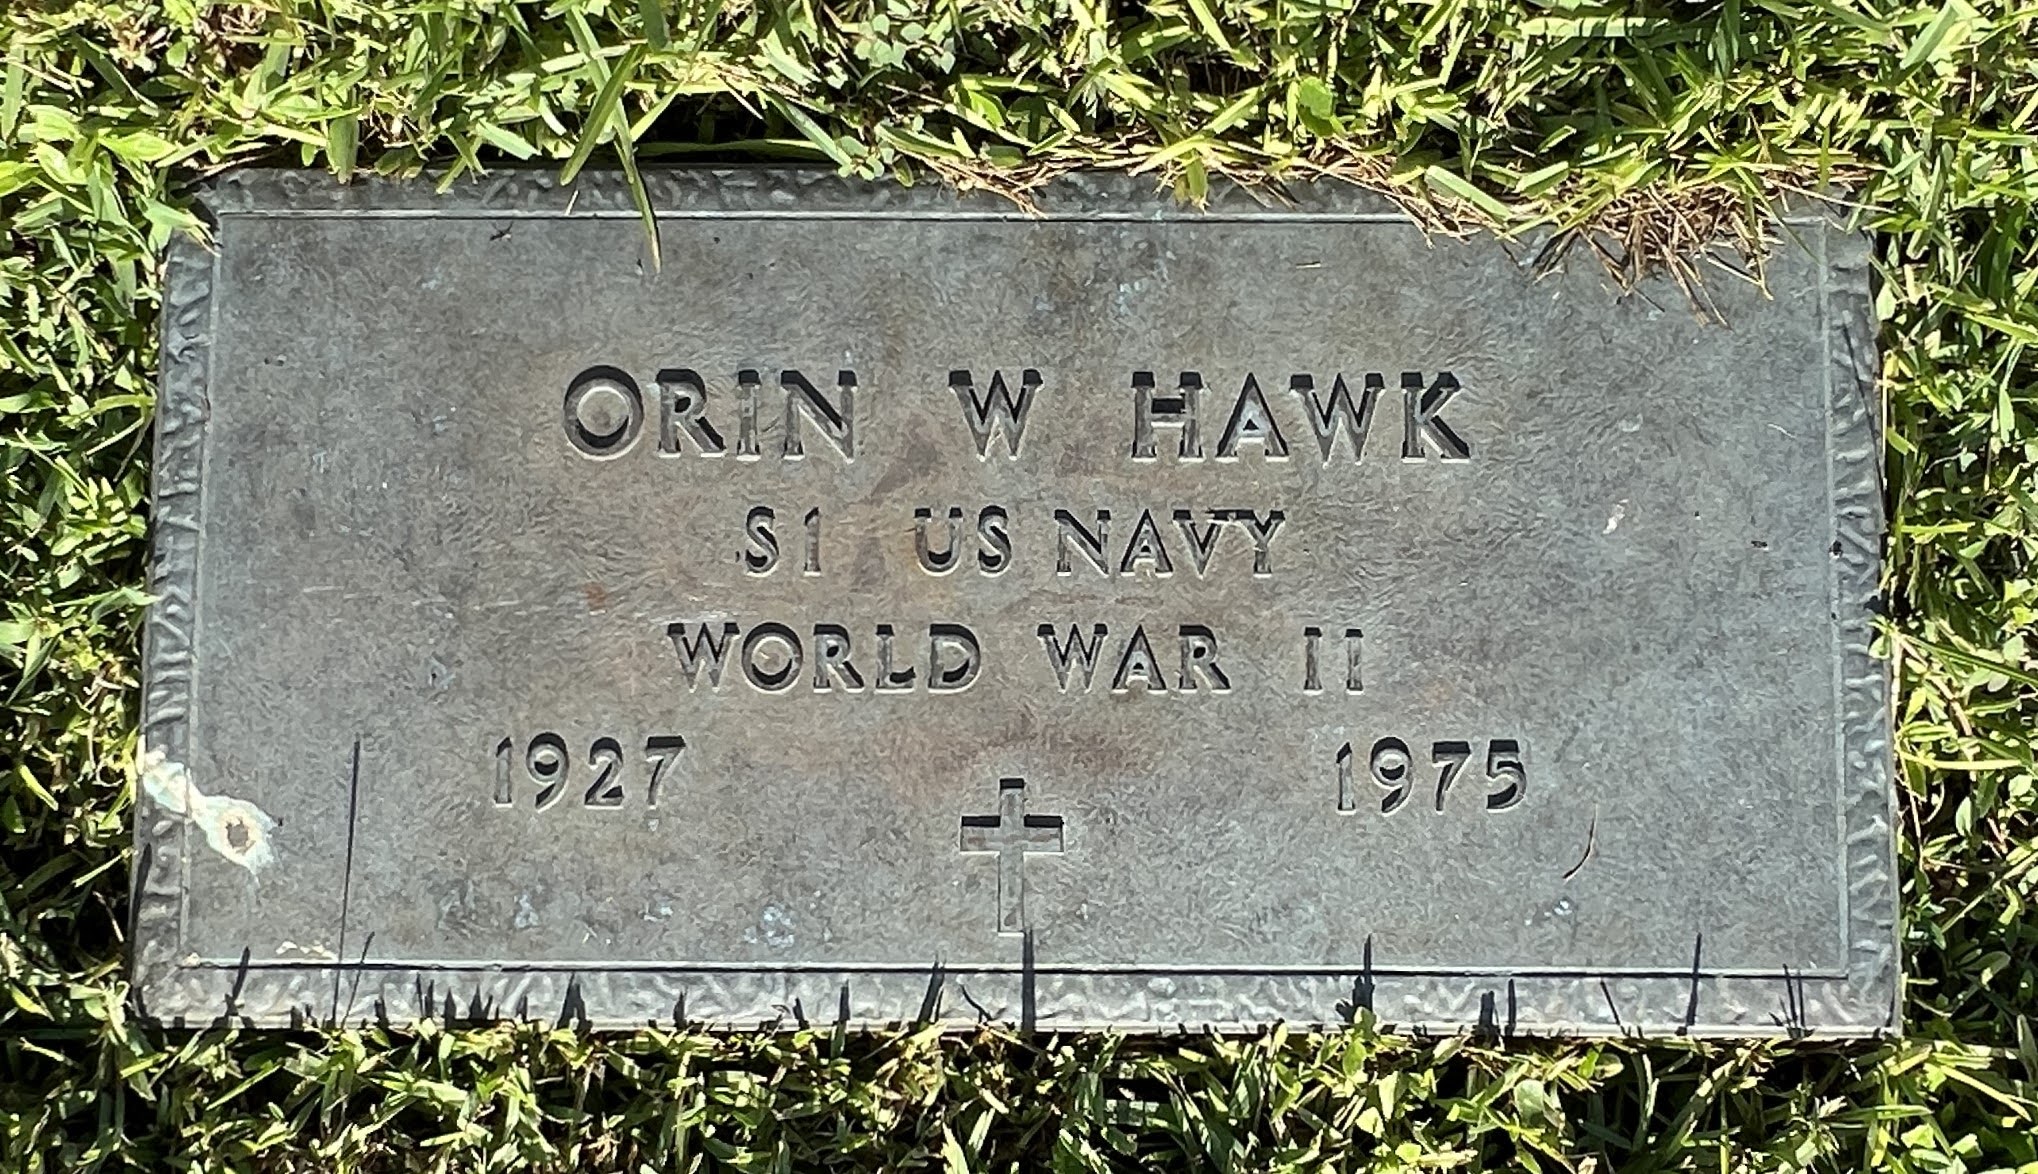 Orin W Hawk